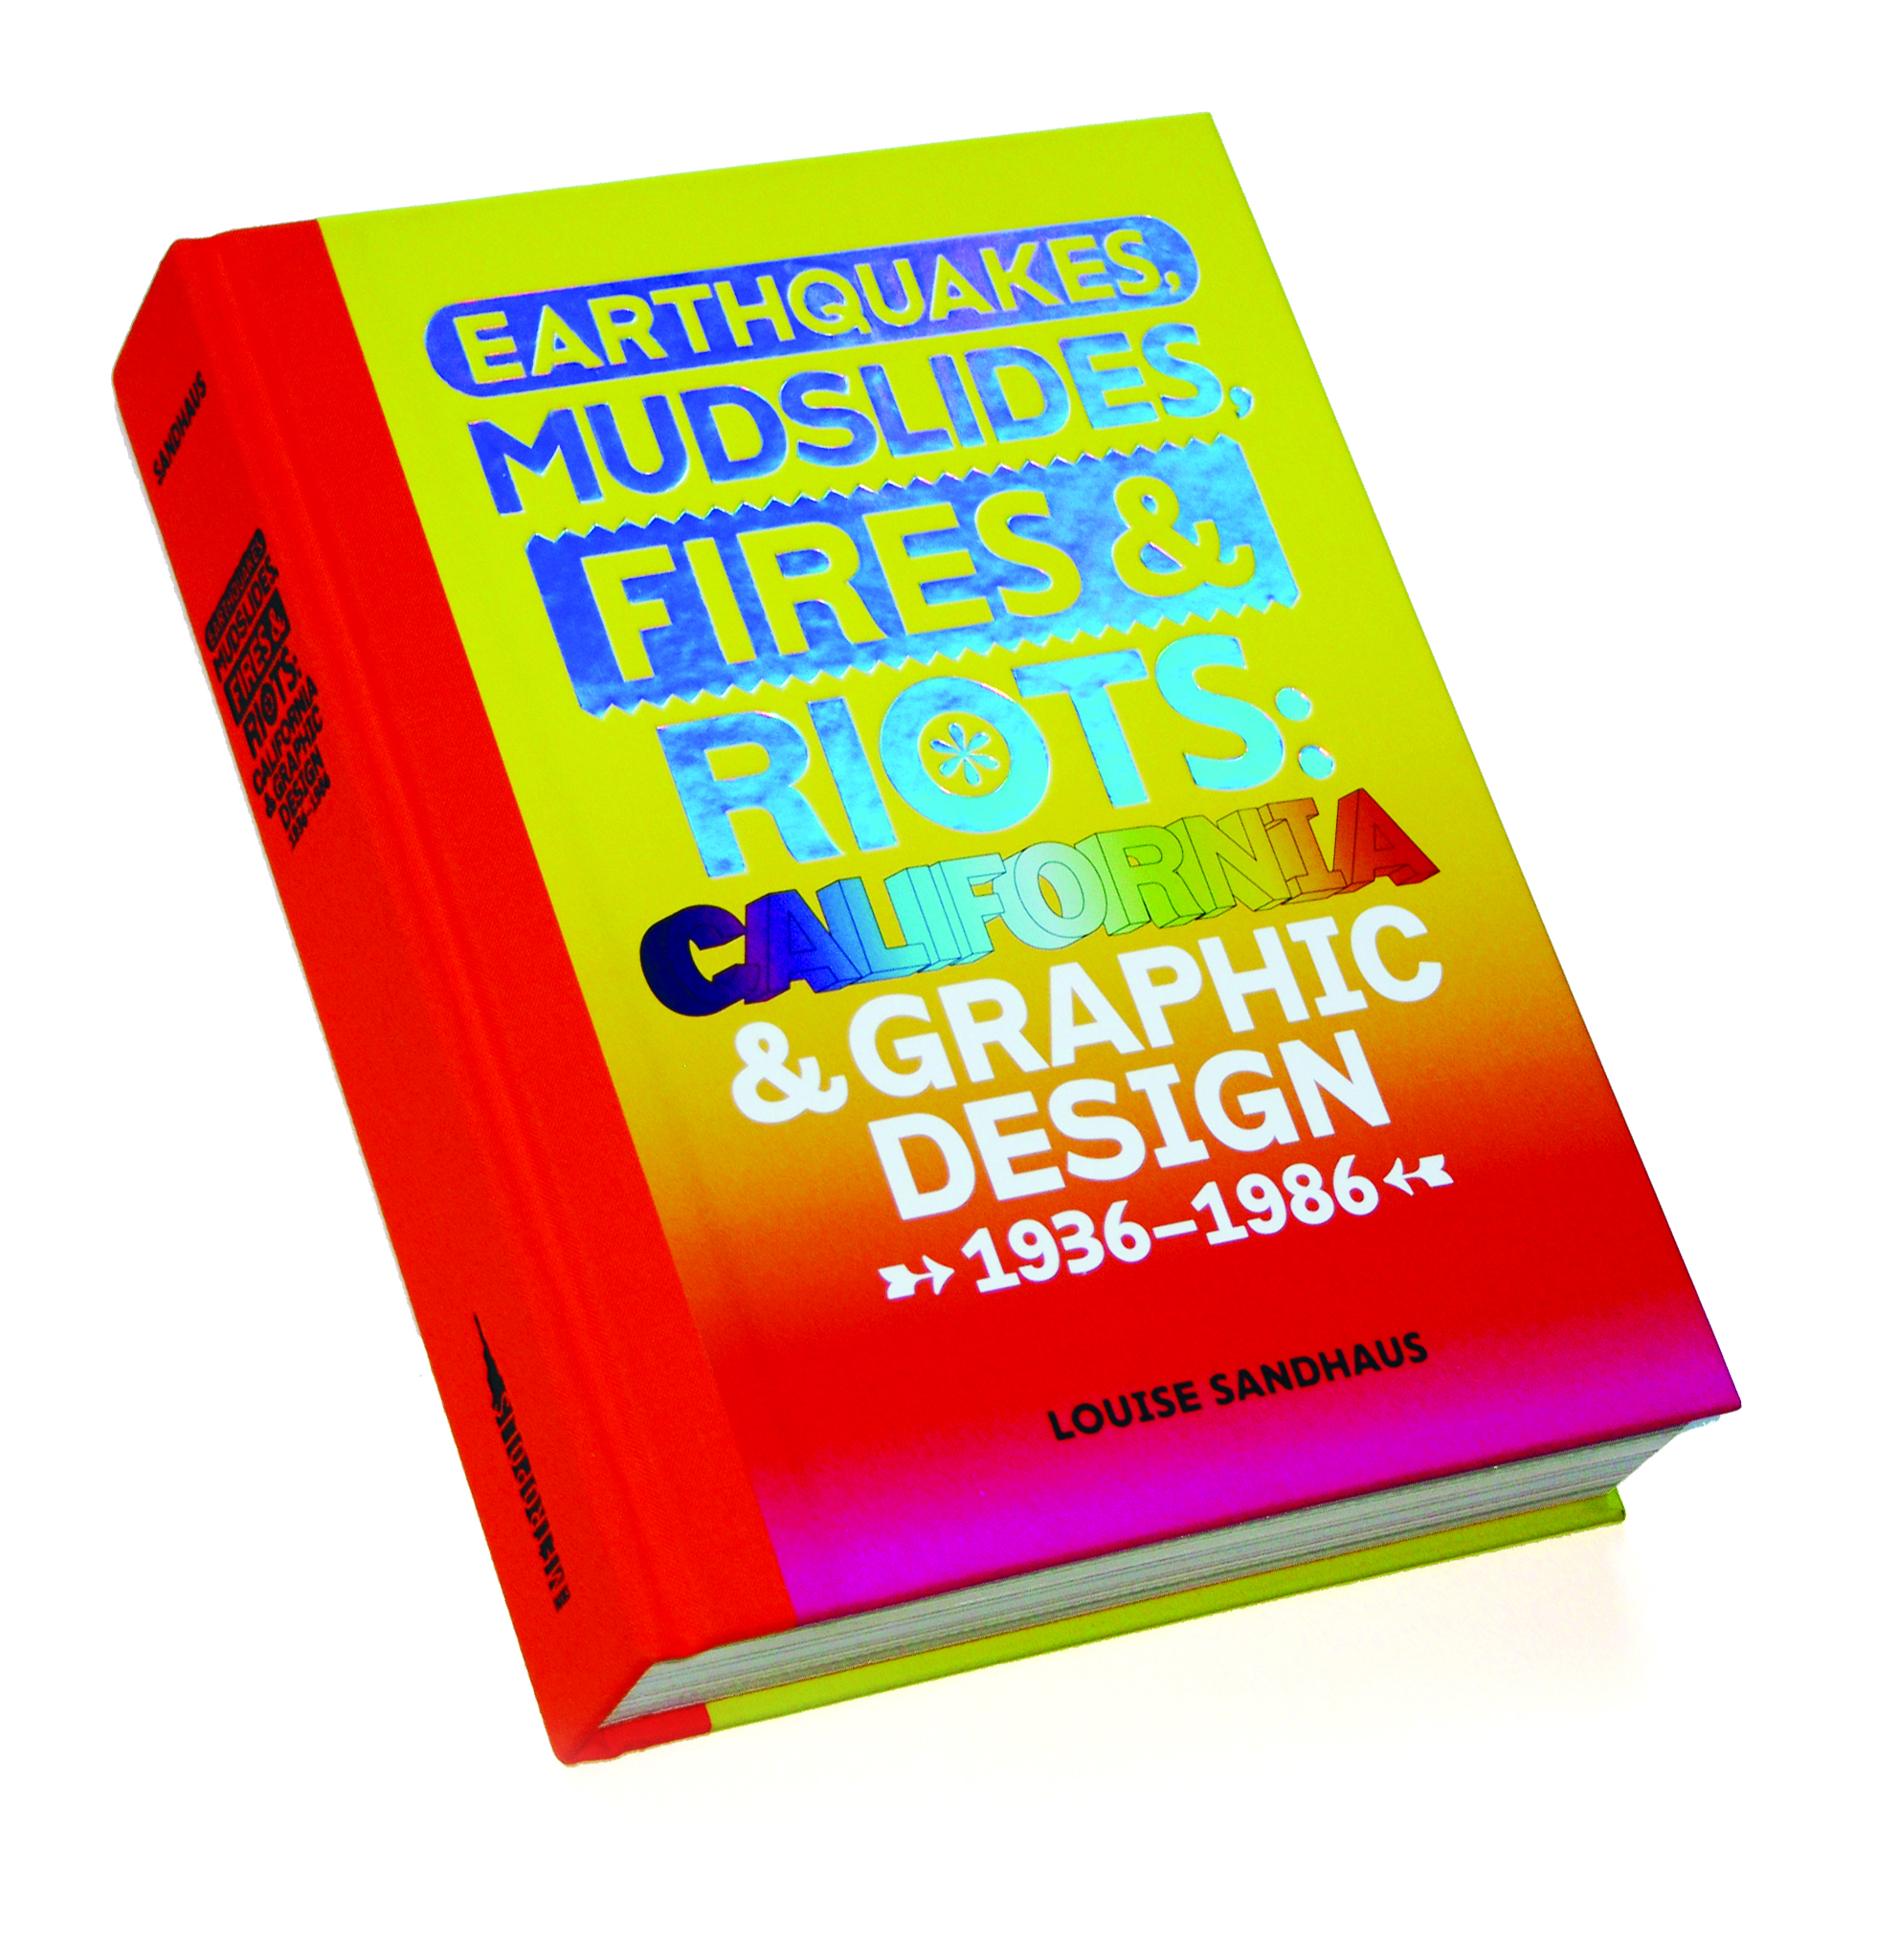 25 Award-Winning Book Designs - Print Magazine